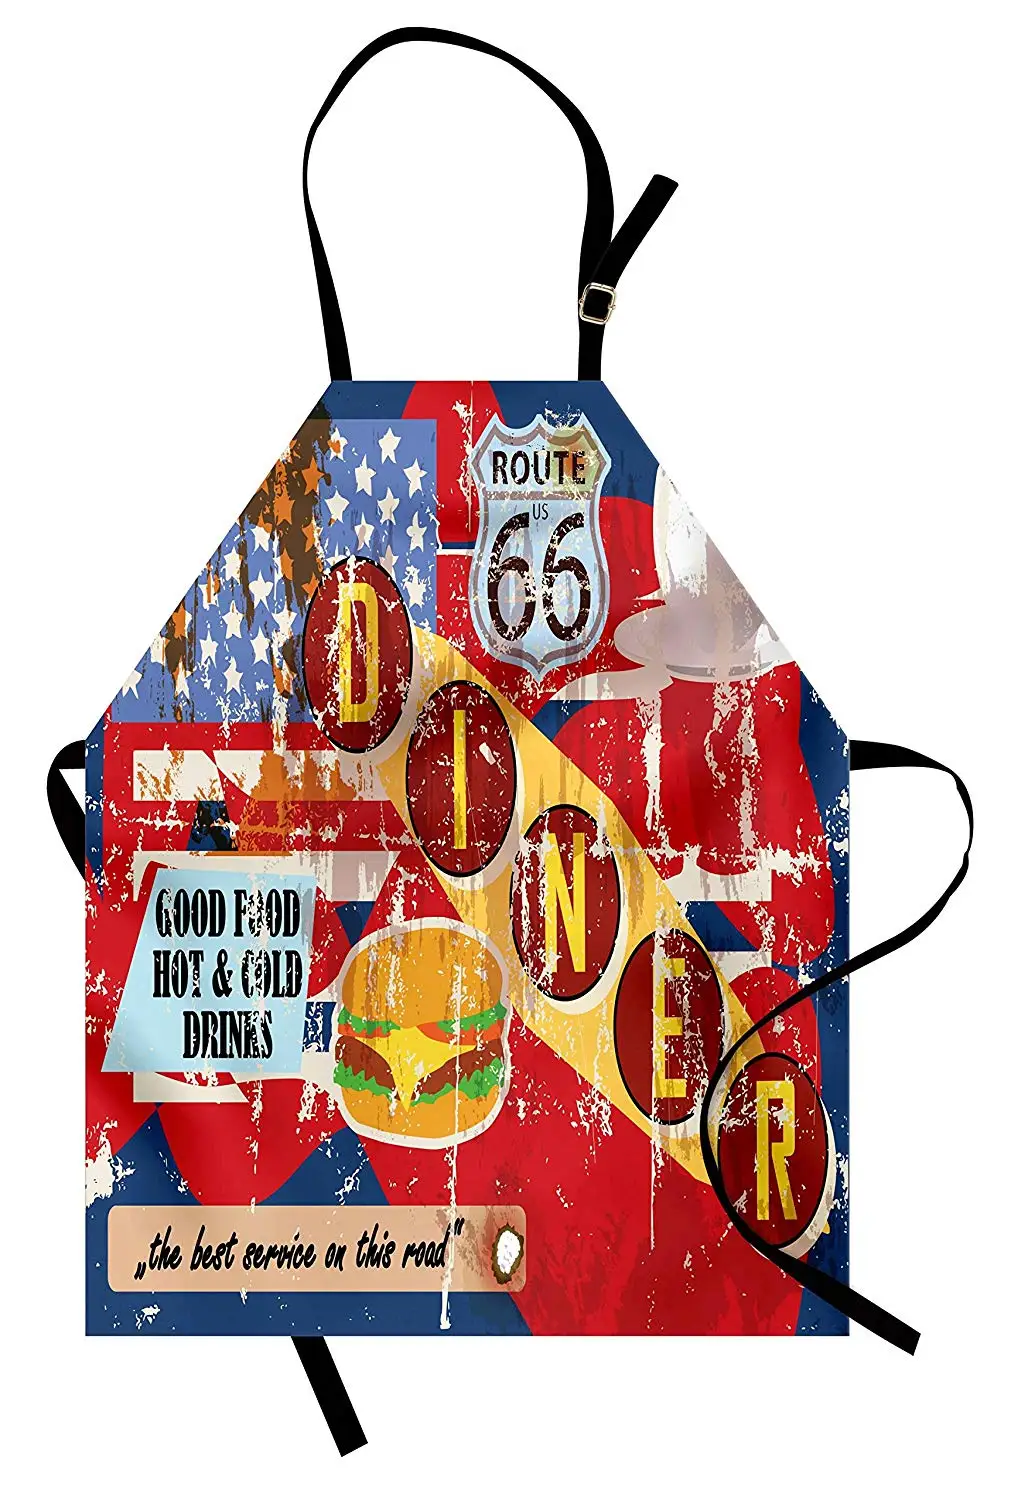 

Route 66 фартук Grungy Diner реклама с звезды американского флага хорошая еда напитки типография унисекс кухонные аксессуары